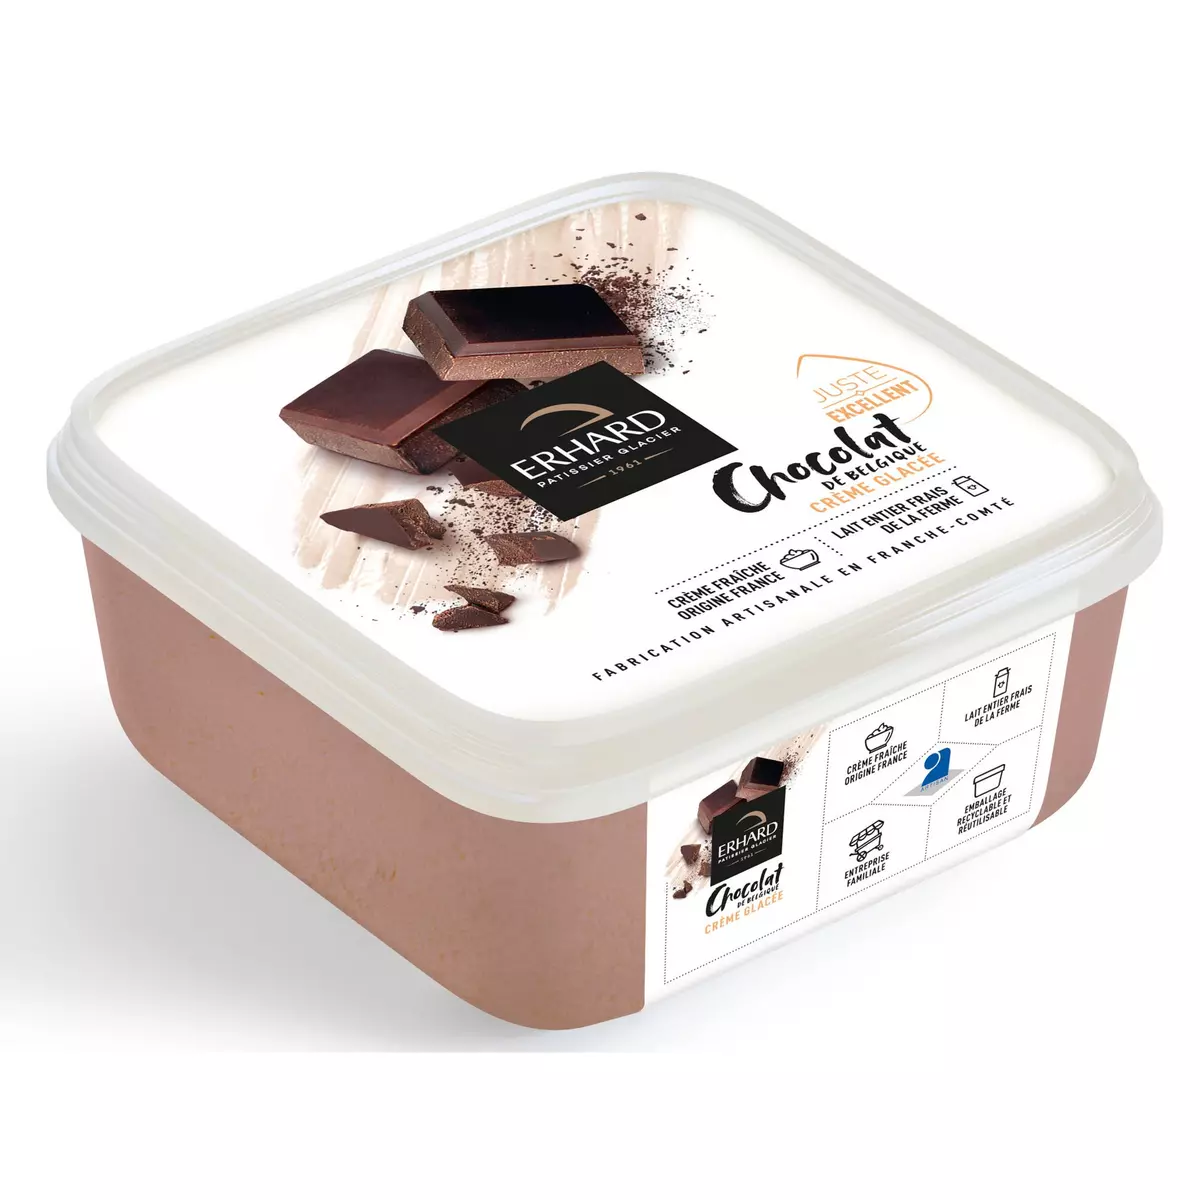 ERHARD Crème glacée au chocolat 450g